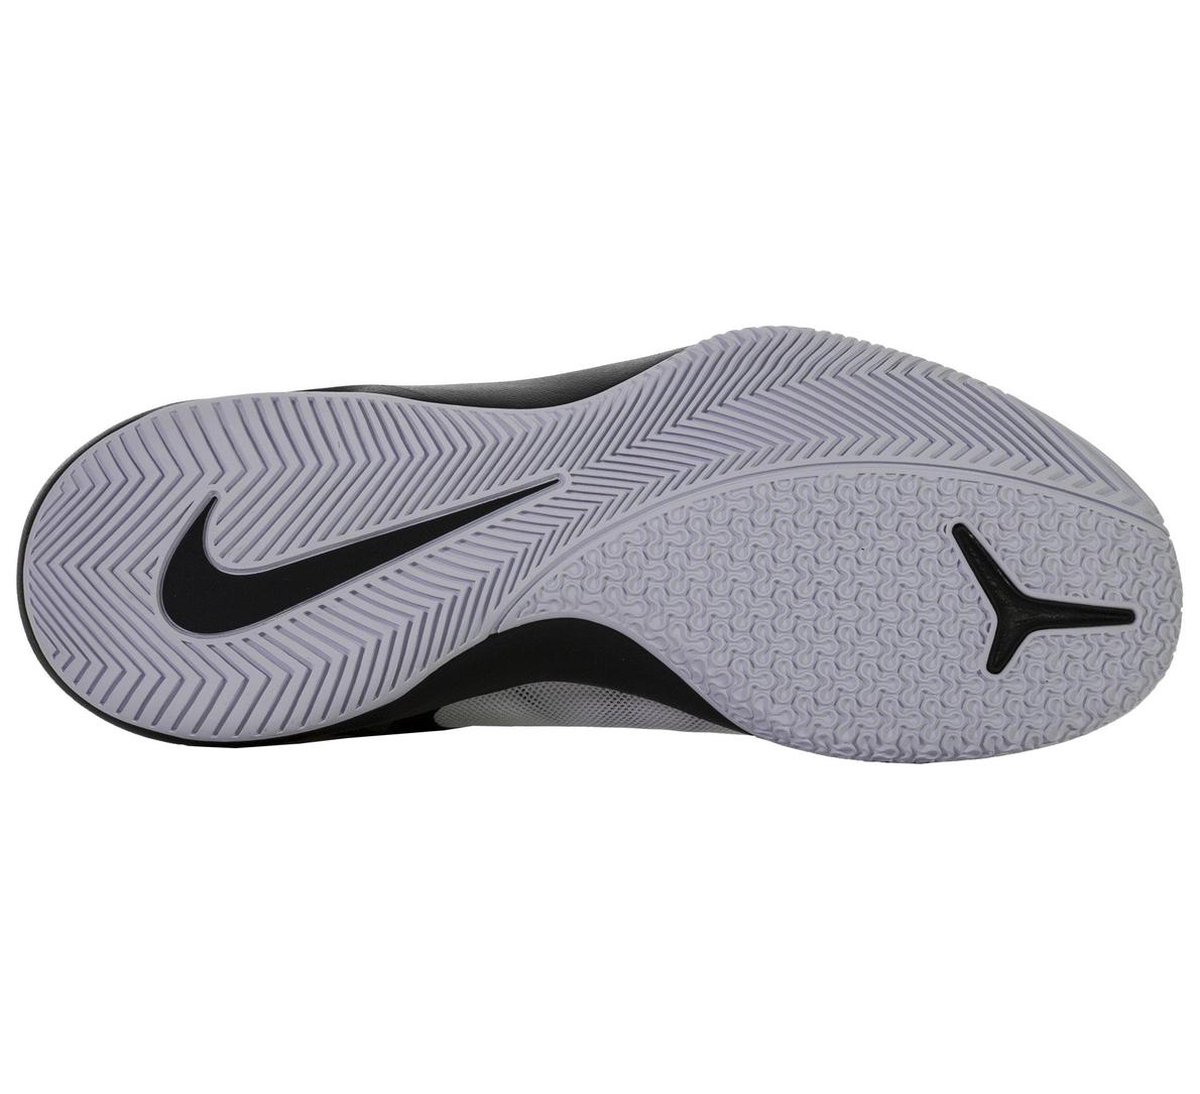 Nike Air Versitile II Basketbalschoenen - Maat 42.5 - Unisex wit/zwart |